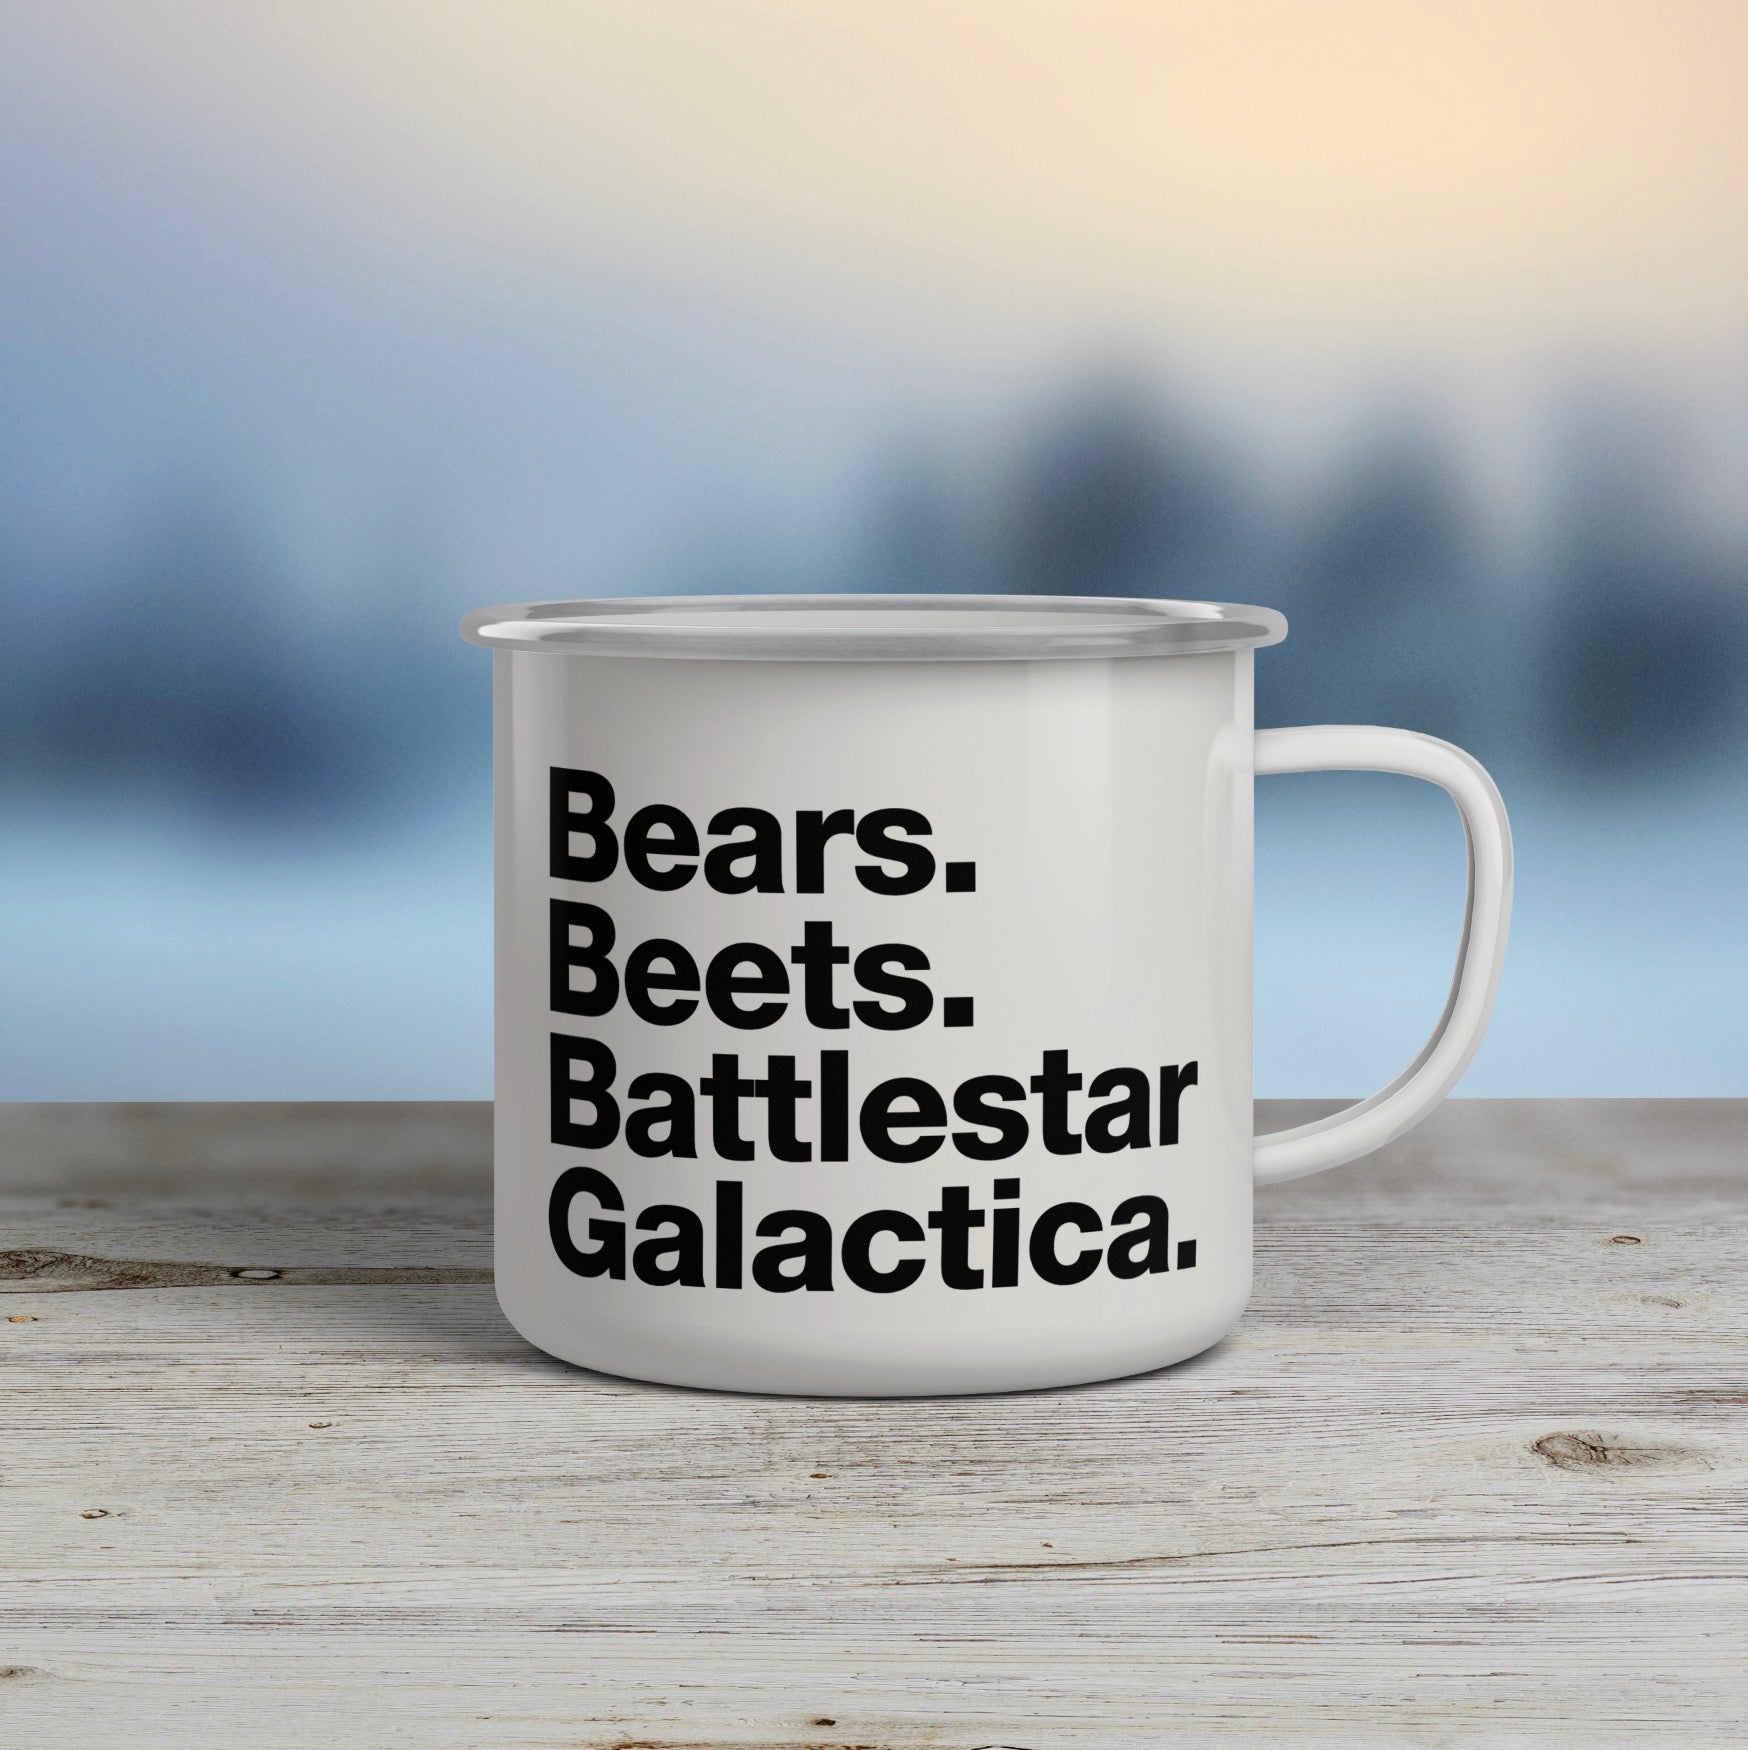 Bears. Beets. Battlestar Galactica